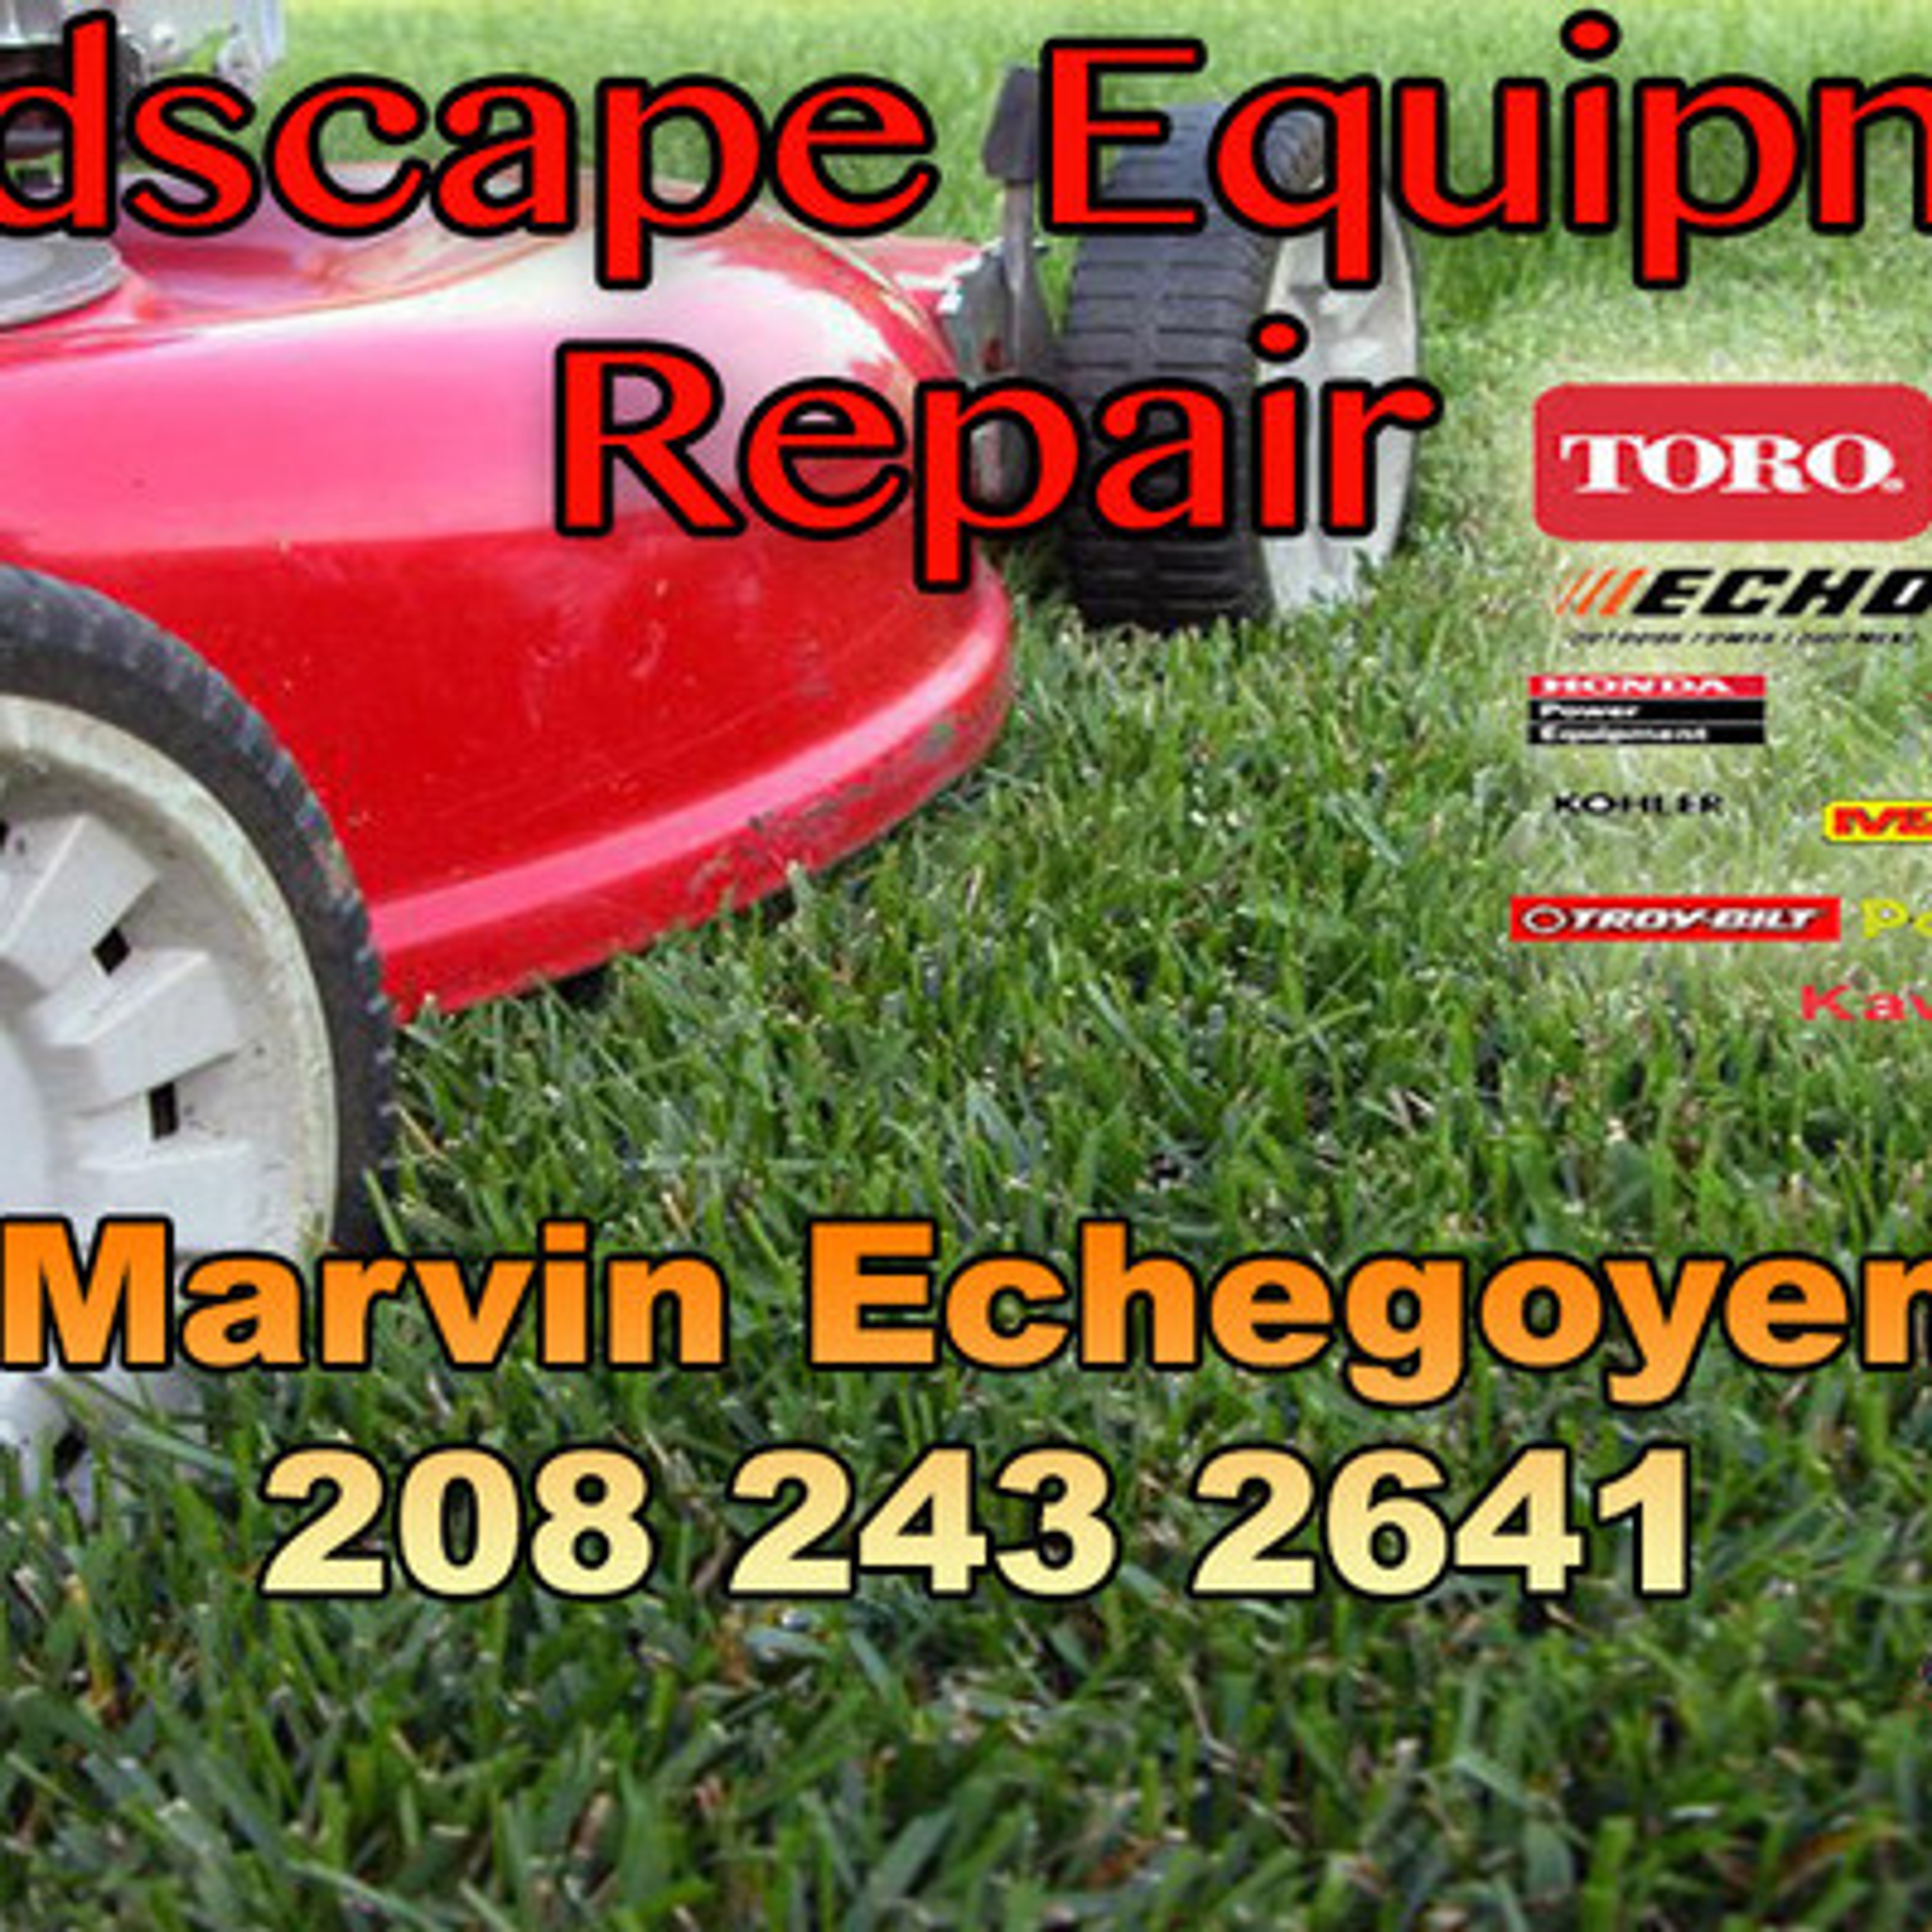 Repair landscape equipment service your lawnmower